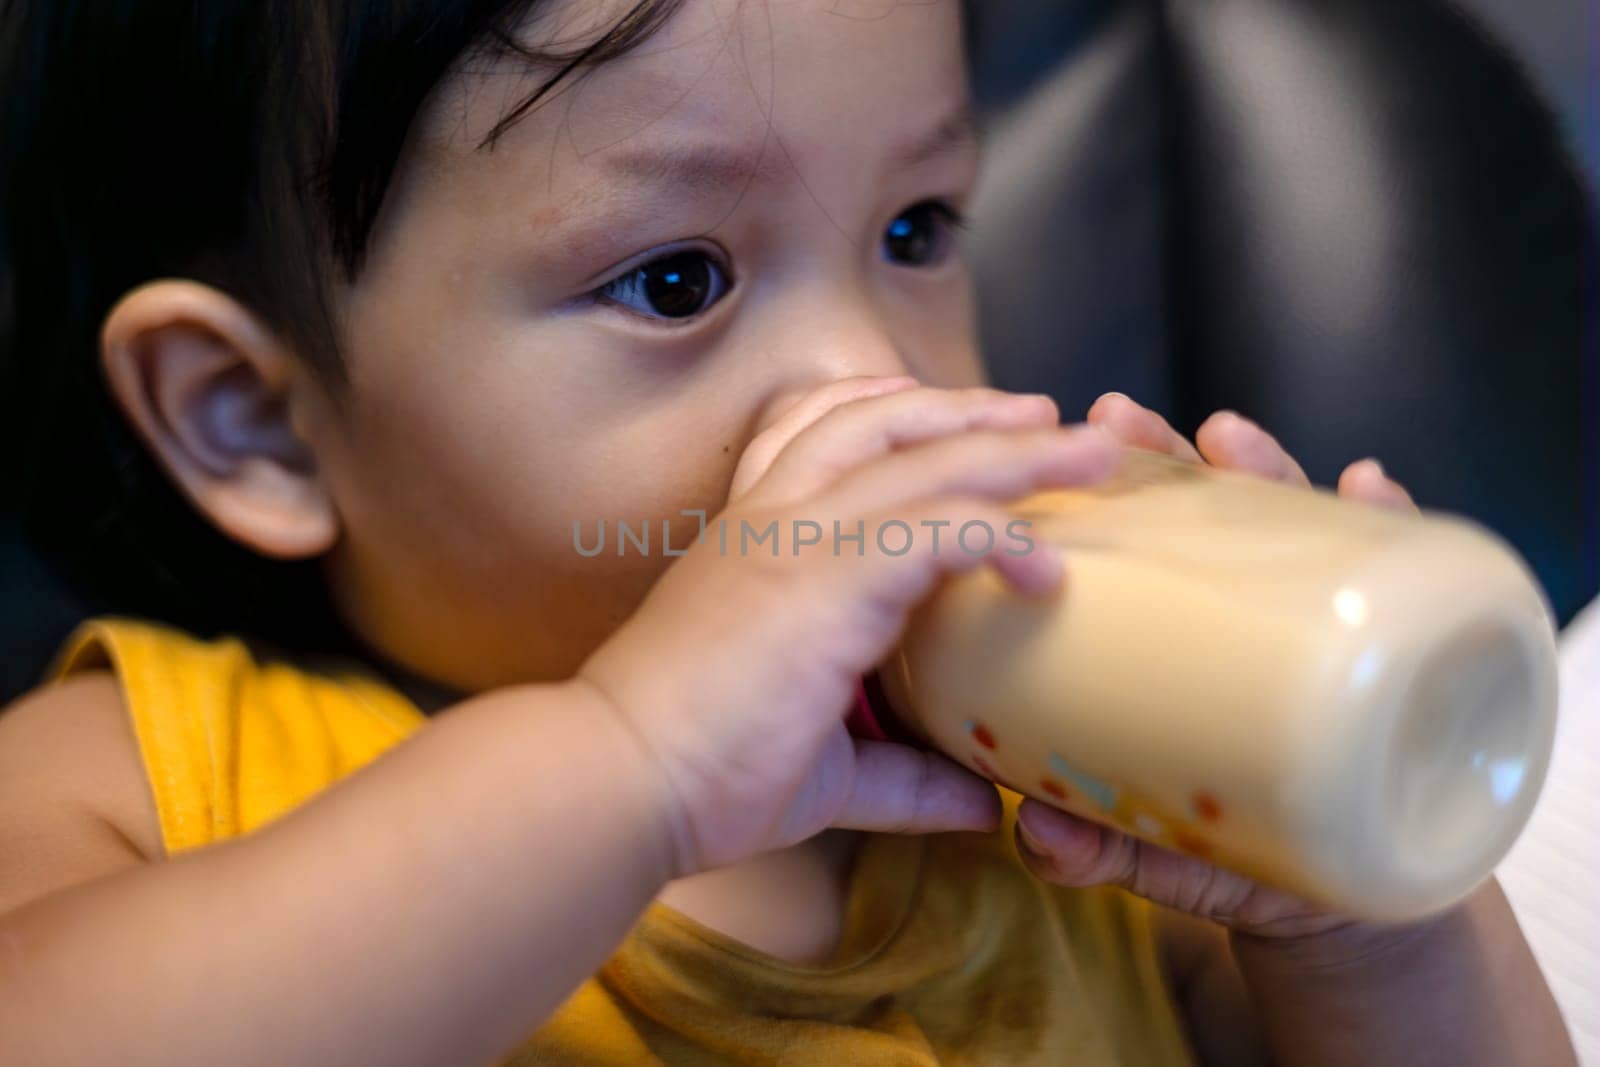 Baby Feeding Milk In The Bottle by urzine